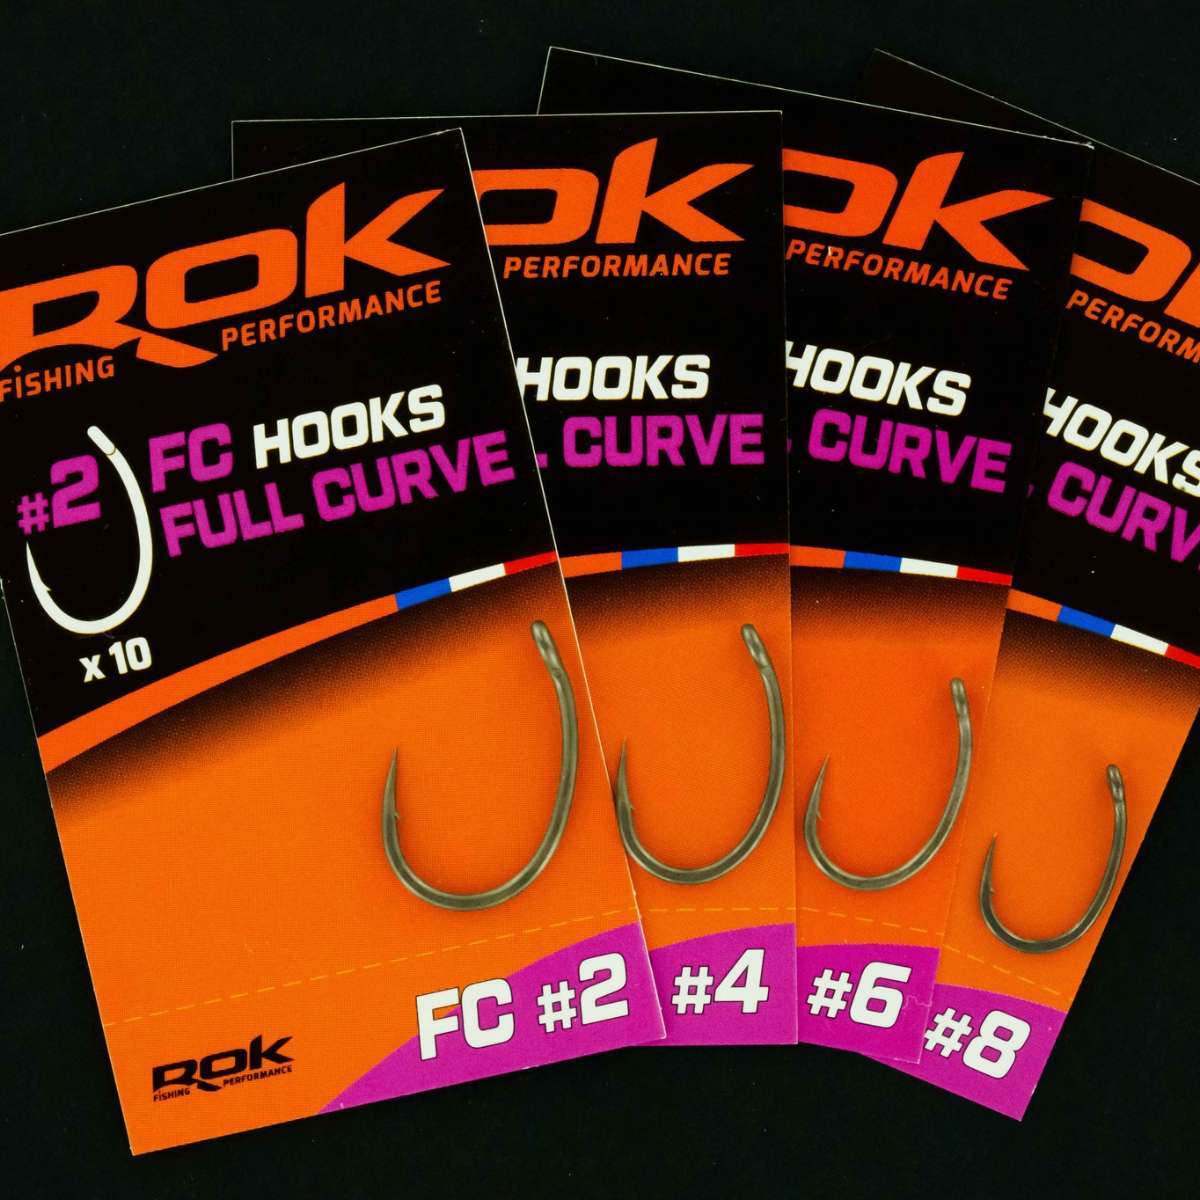 10 FC hooks full curve